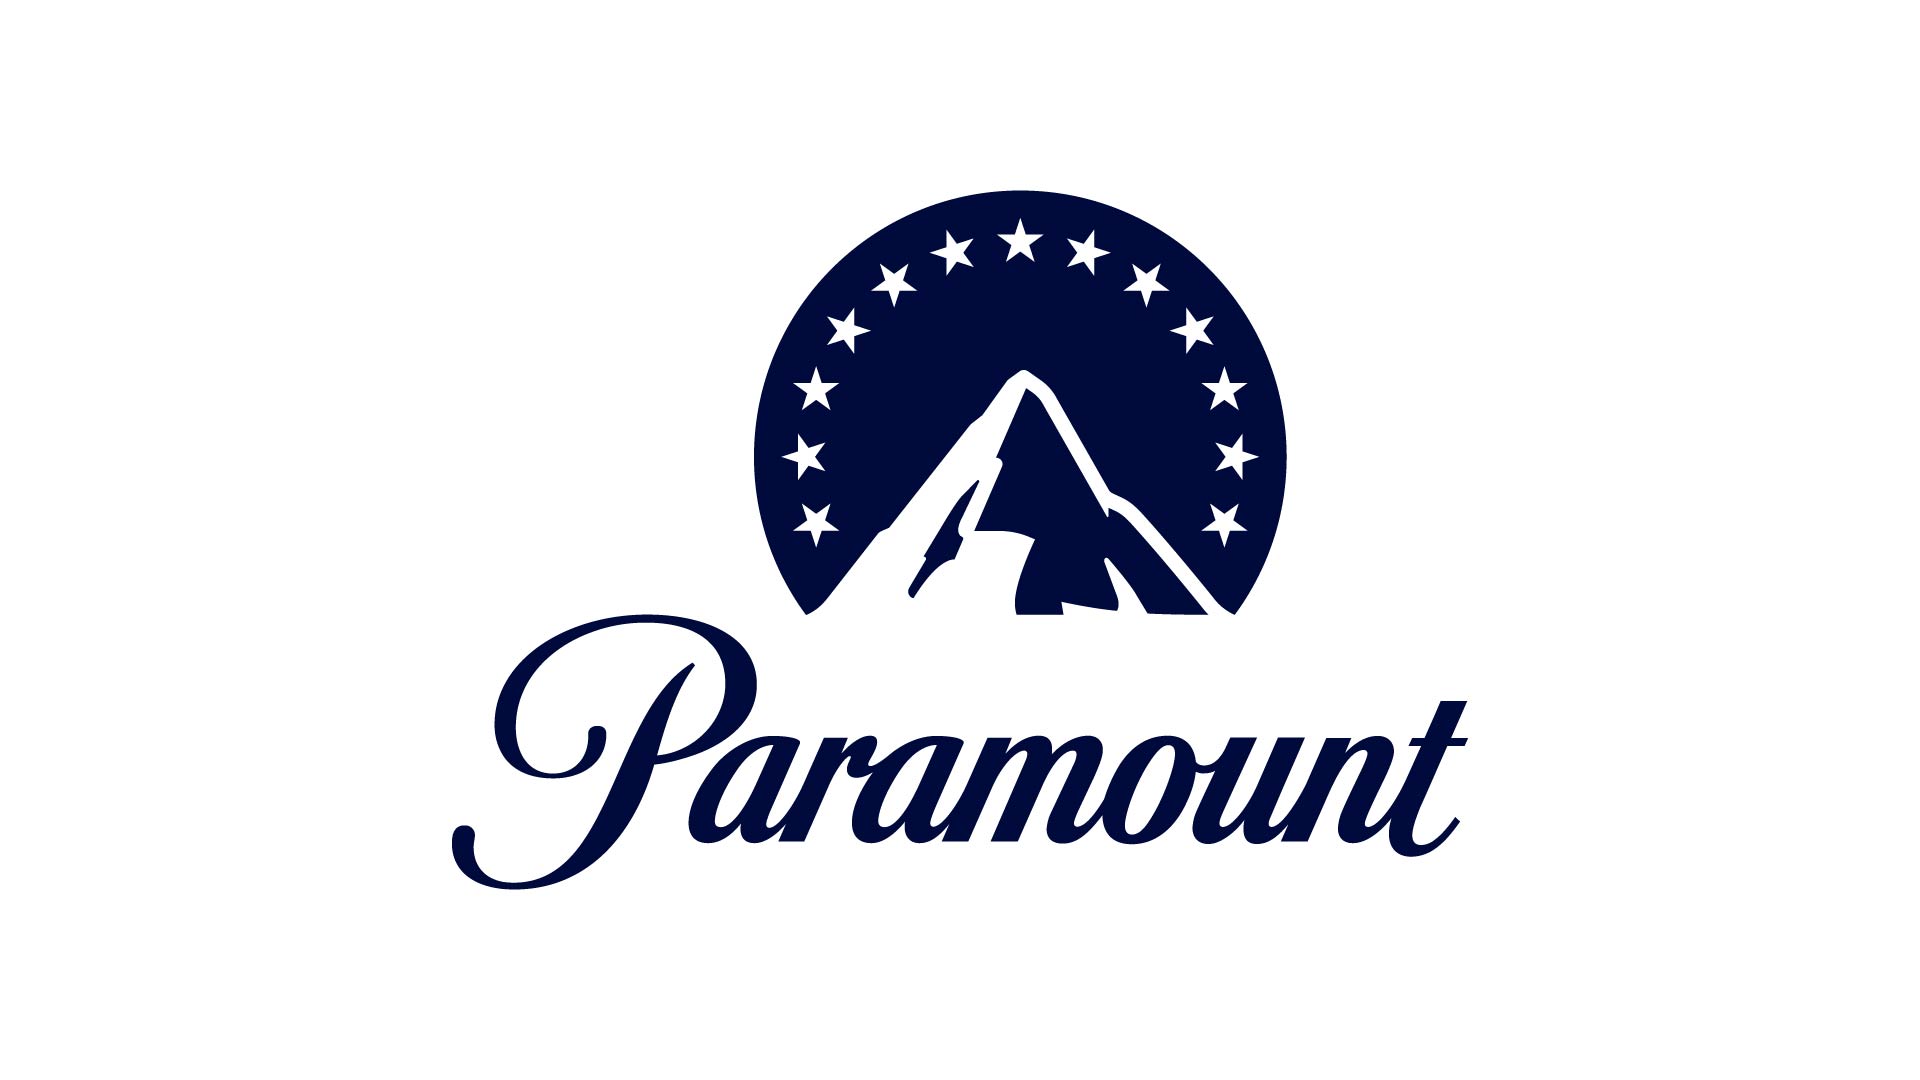 ViacomCBS Announces New Company Name: Paramount